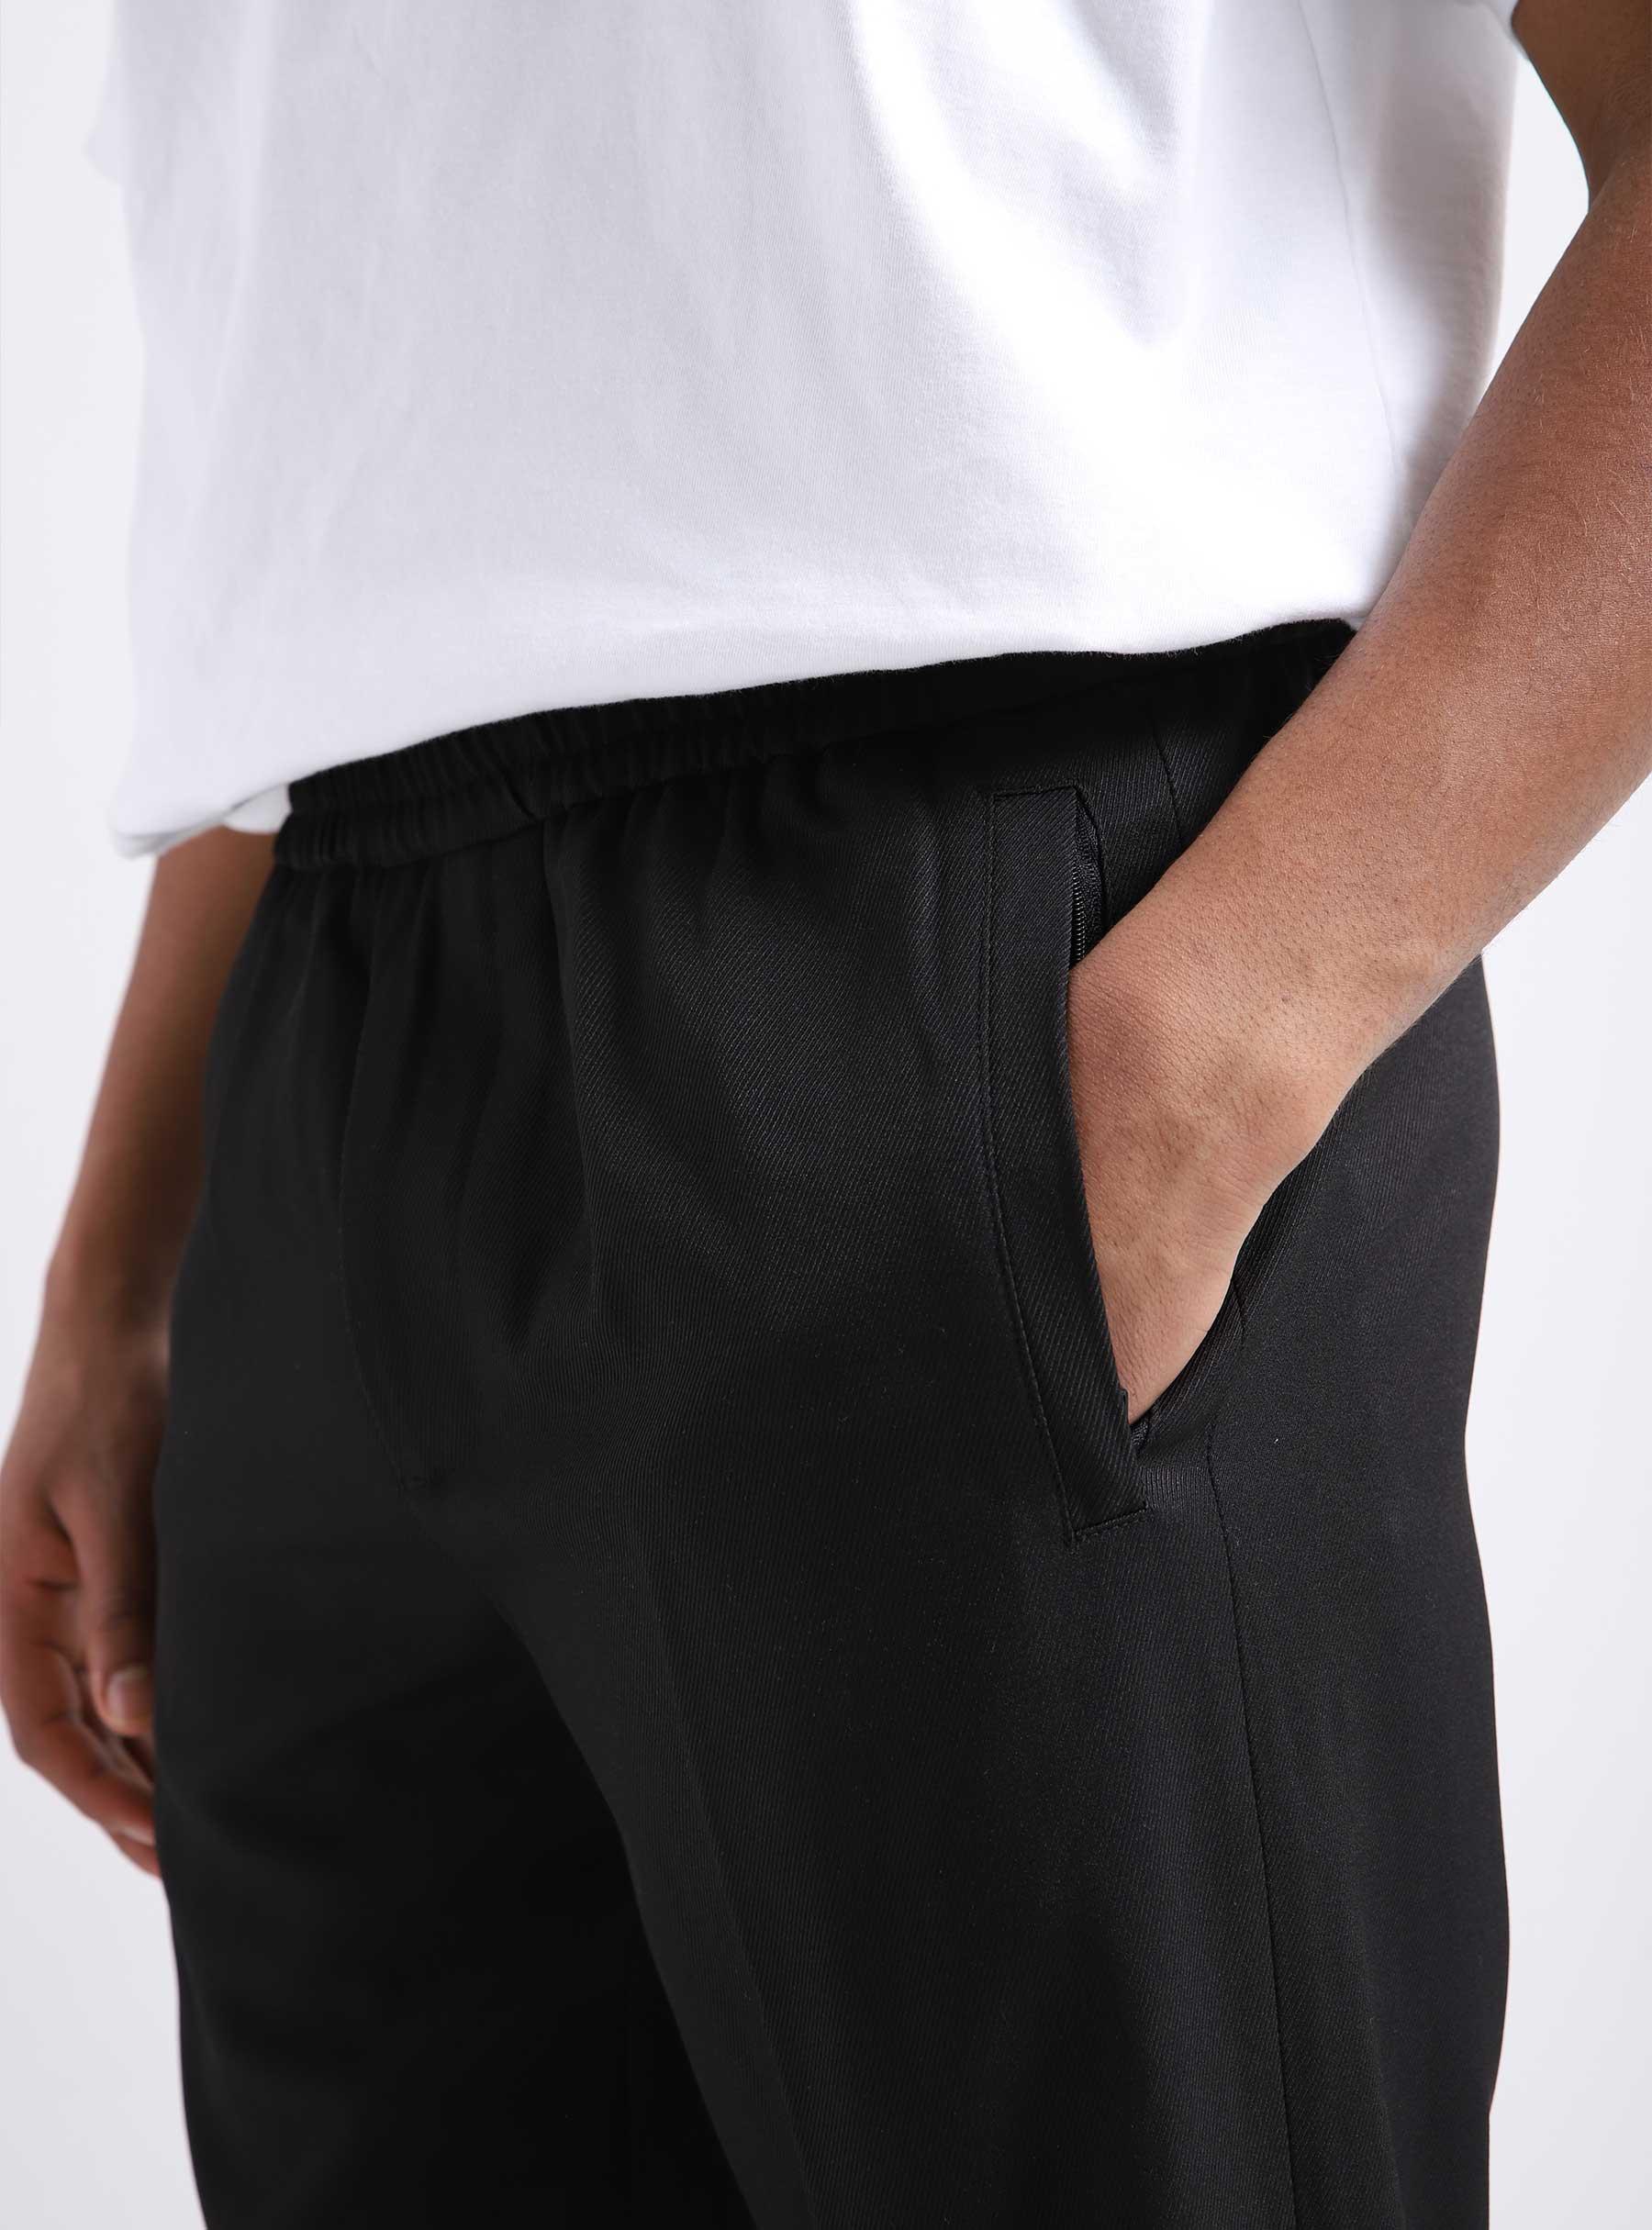 Slim Elasticated Trouser Black M990402